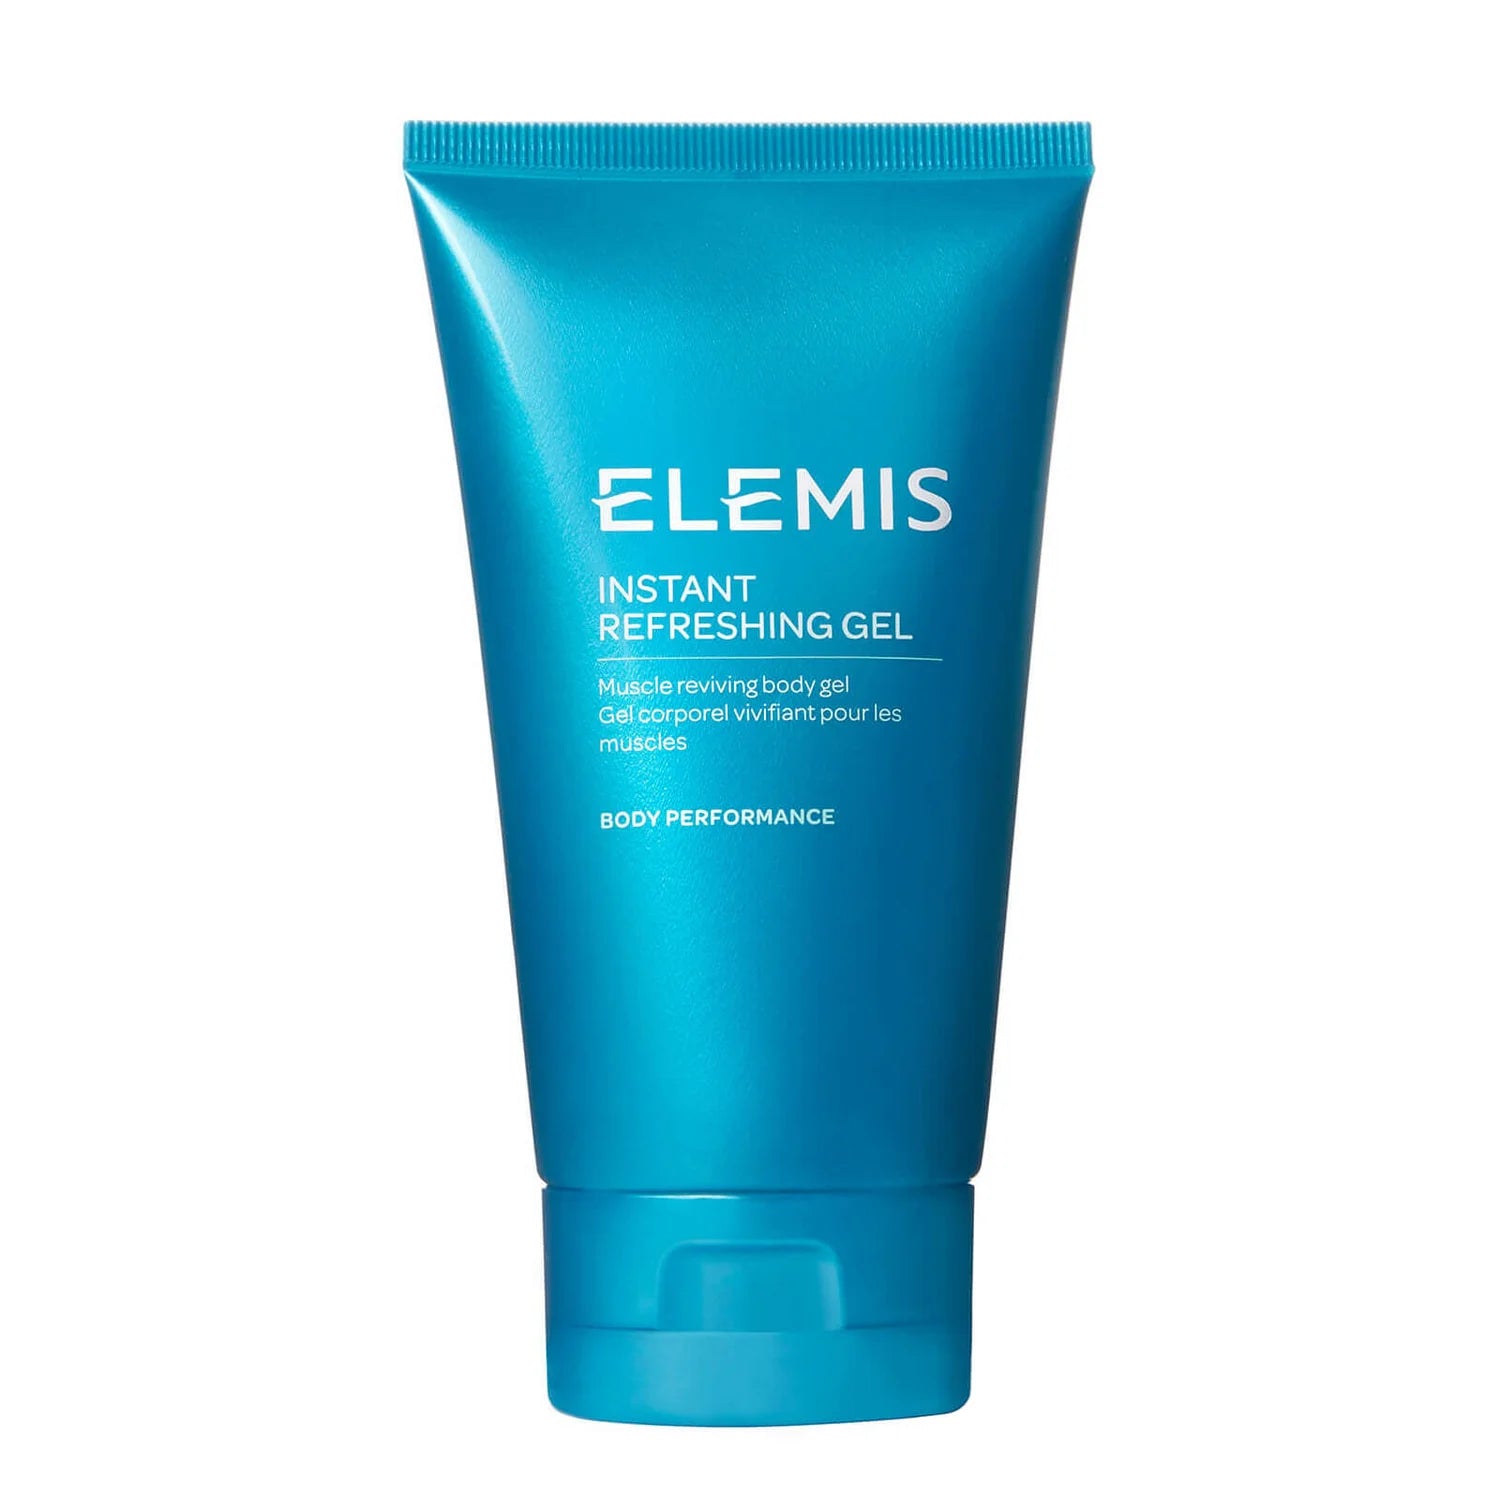 ELEMIS Instant Refreshing Gel product image.